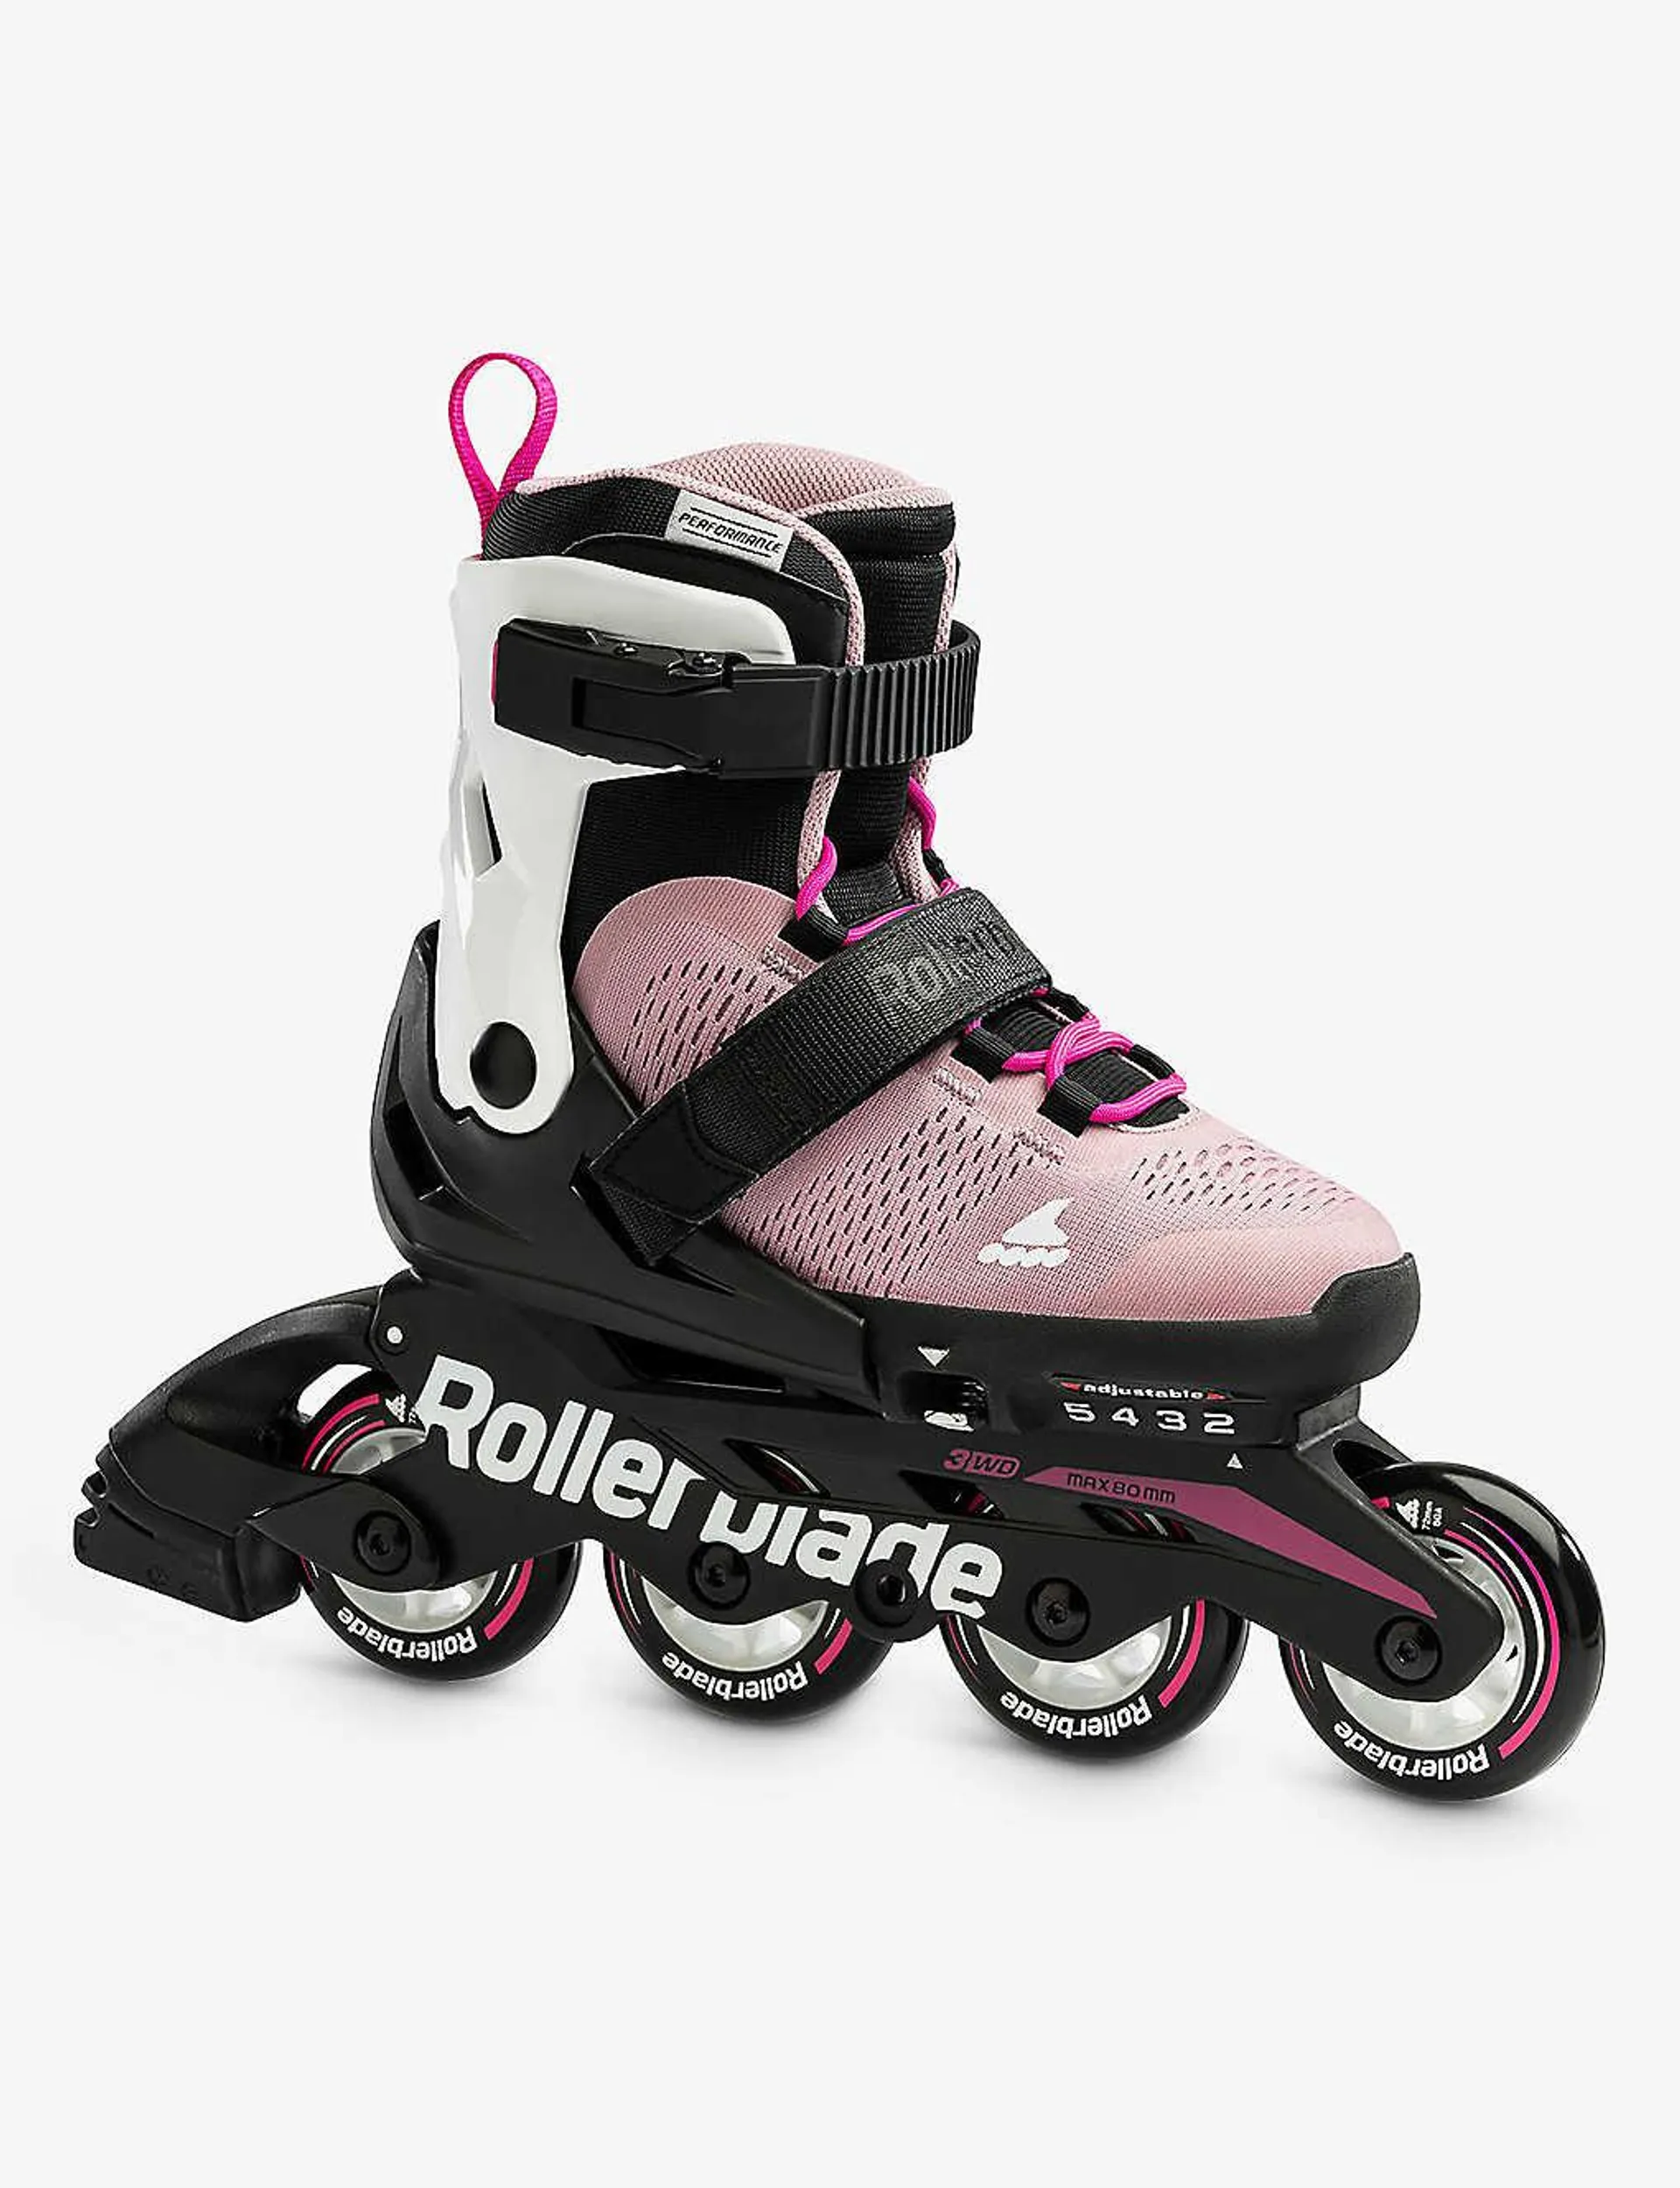 Rollerblade Microblade adjustable in-line roller skates 8-10 years